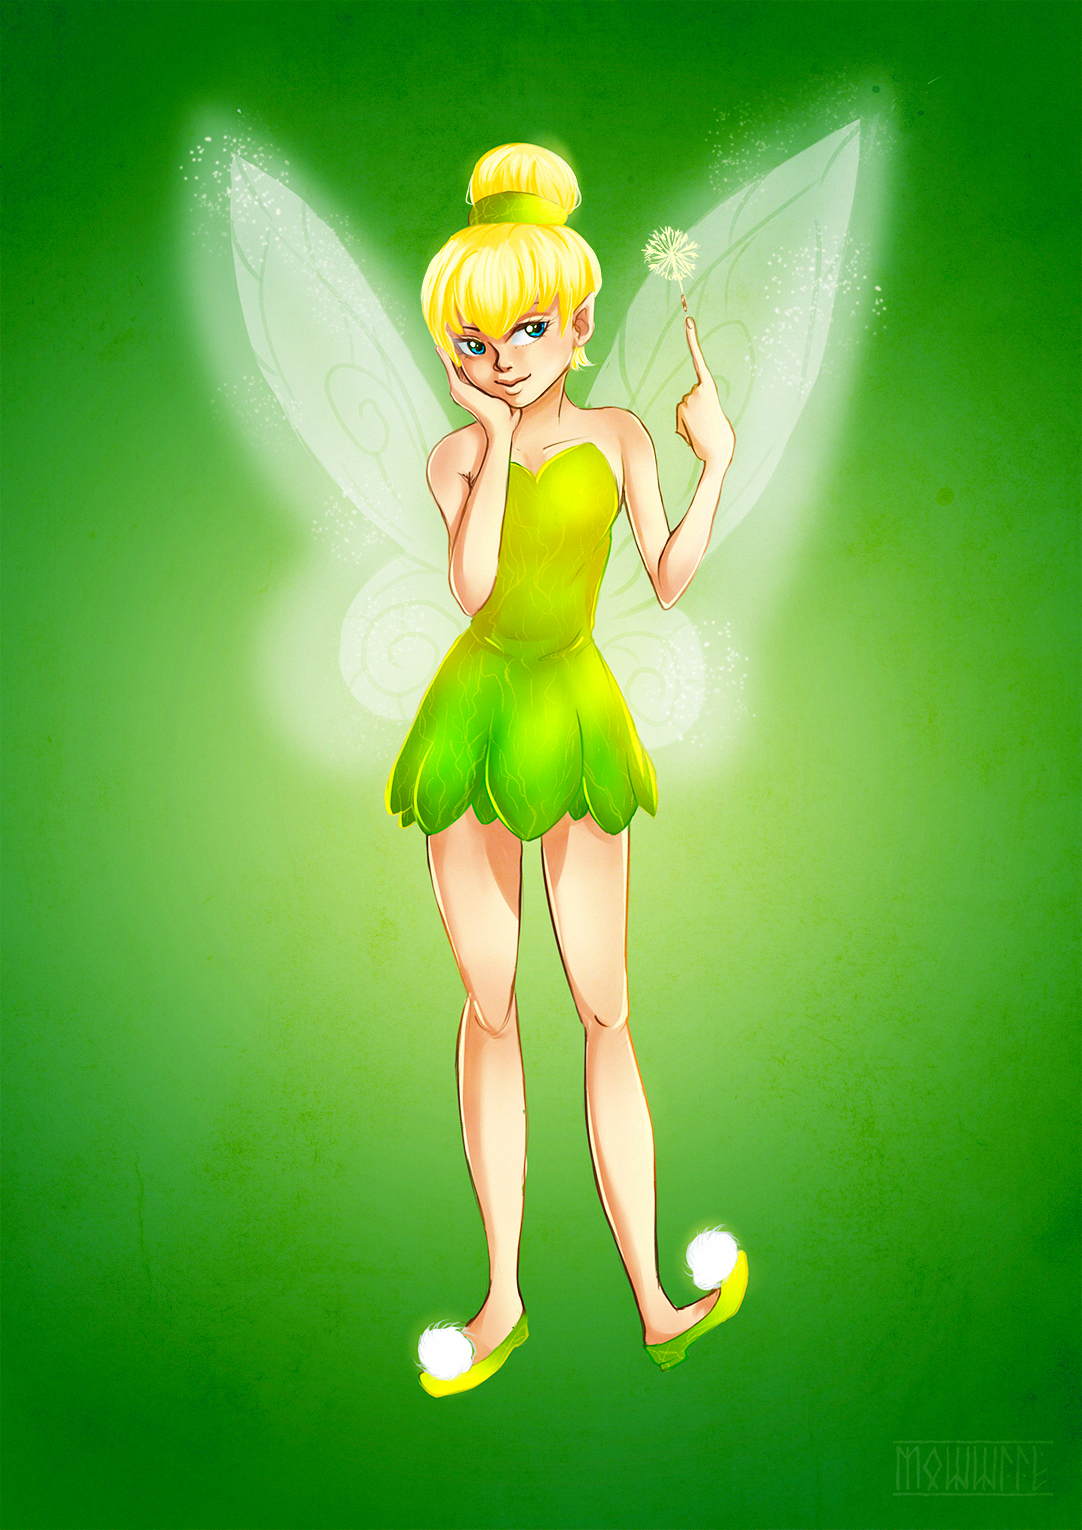 Tinker fairy